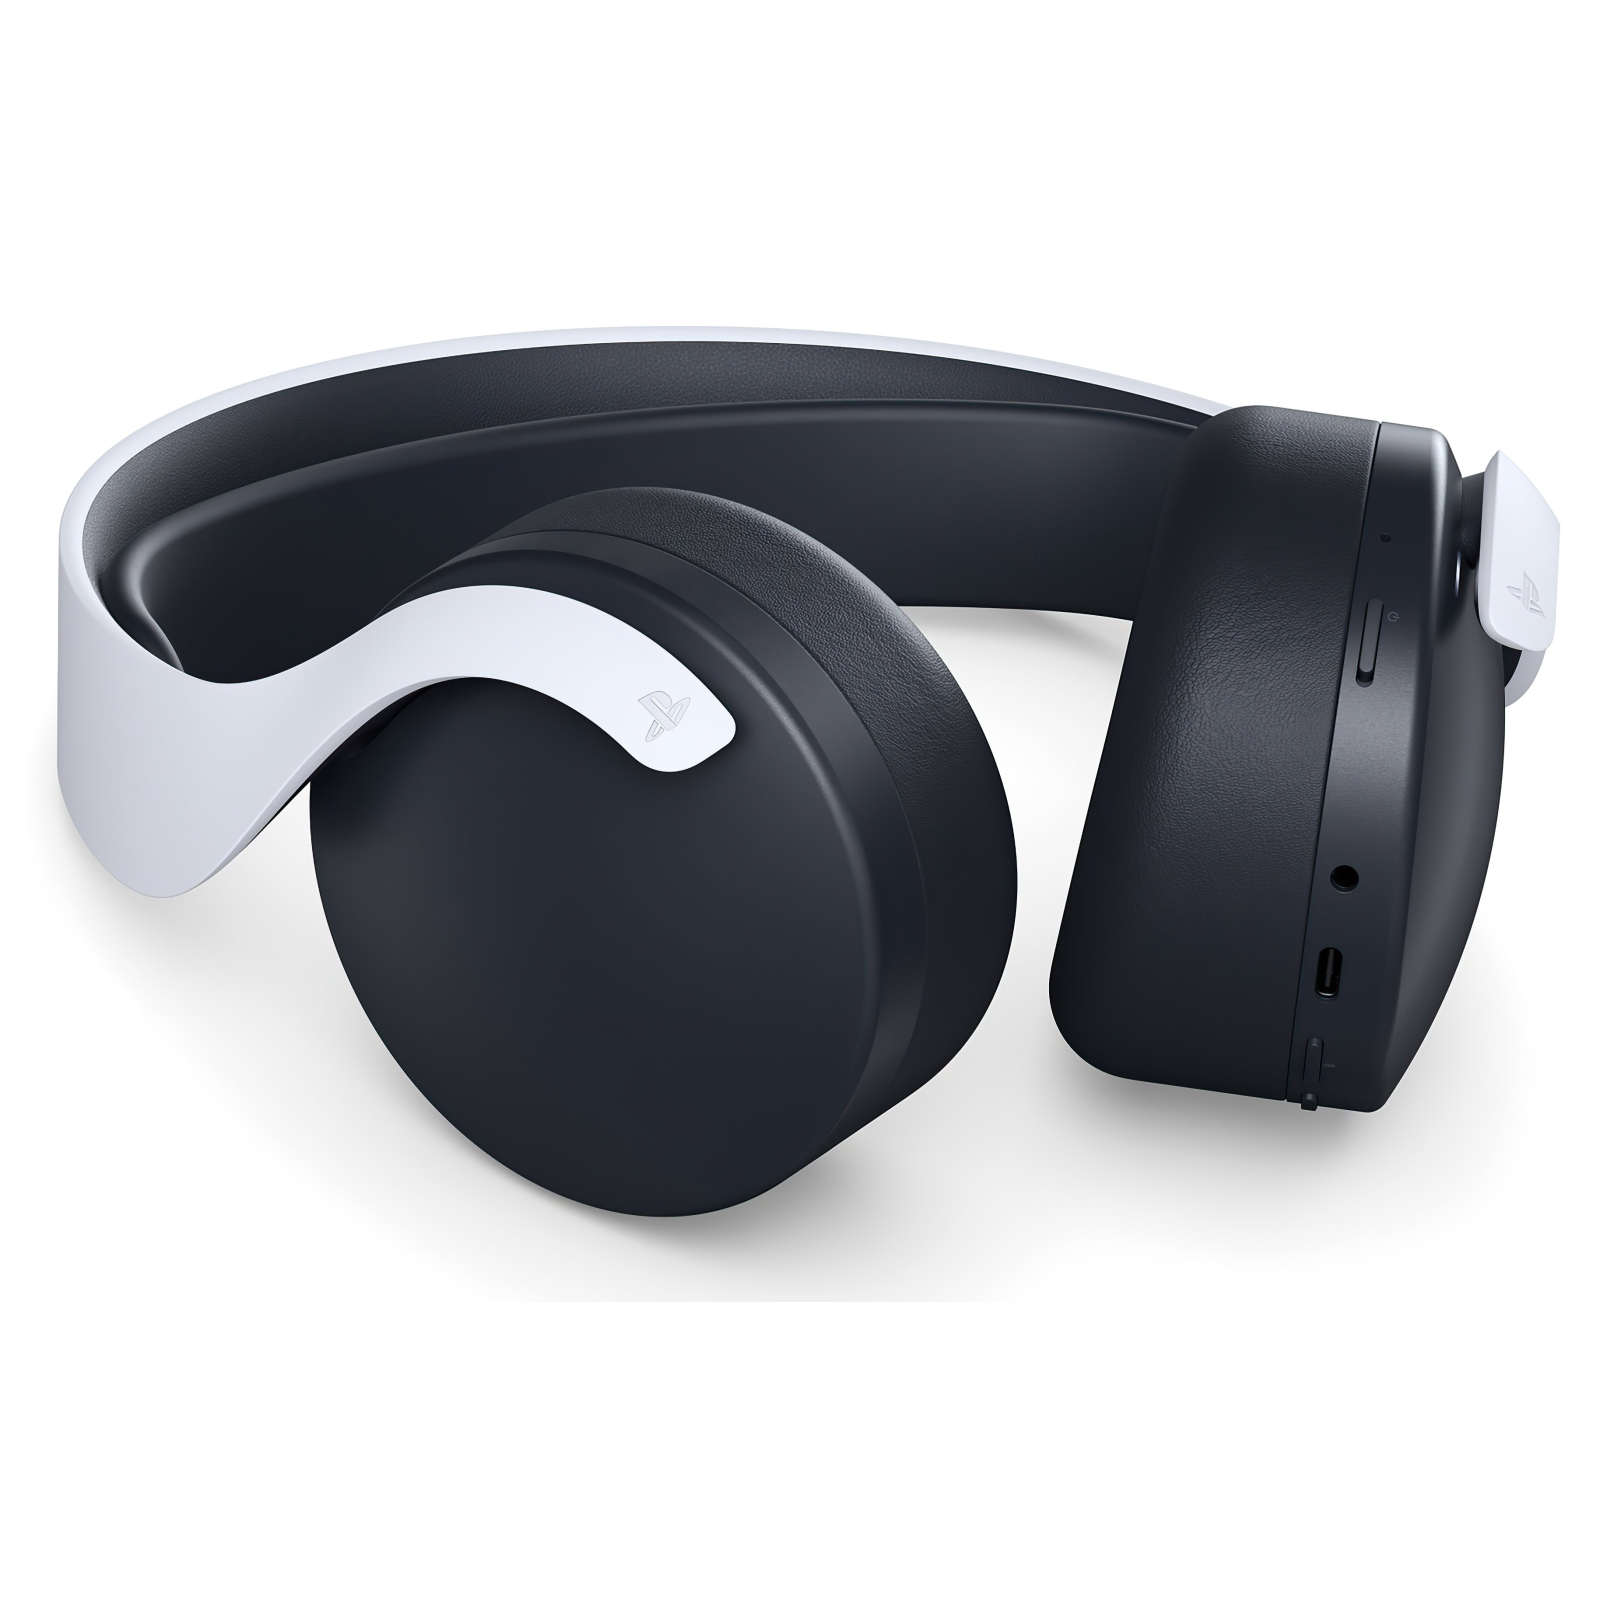 Наушники Playstation 5 Pulse 3D Wireless Headset Black (9834090) изображение 4